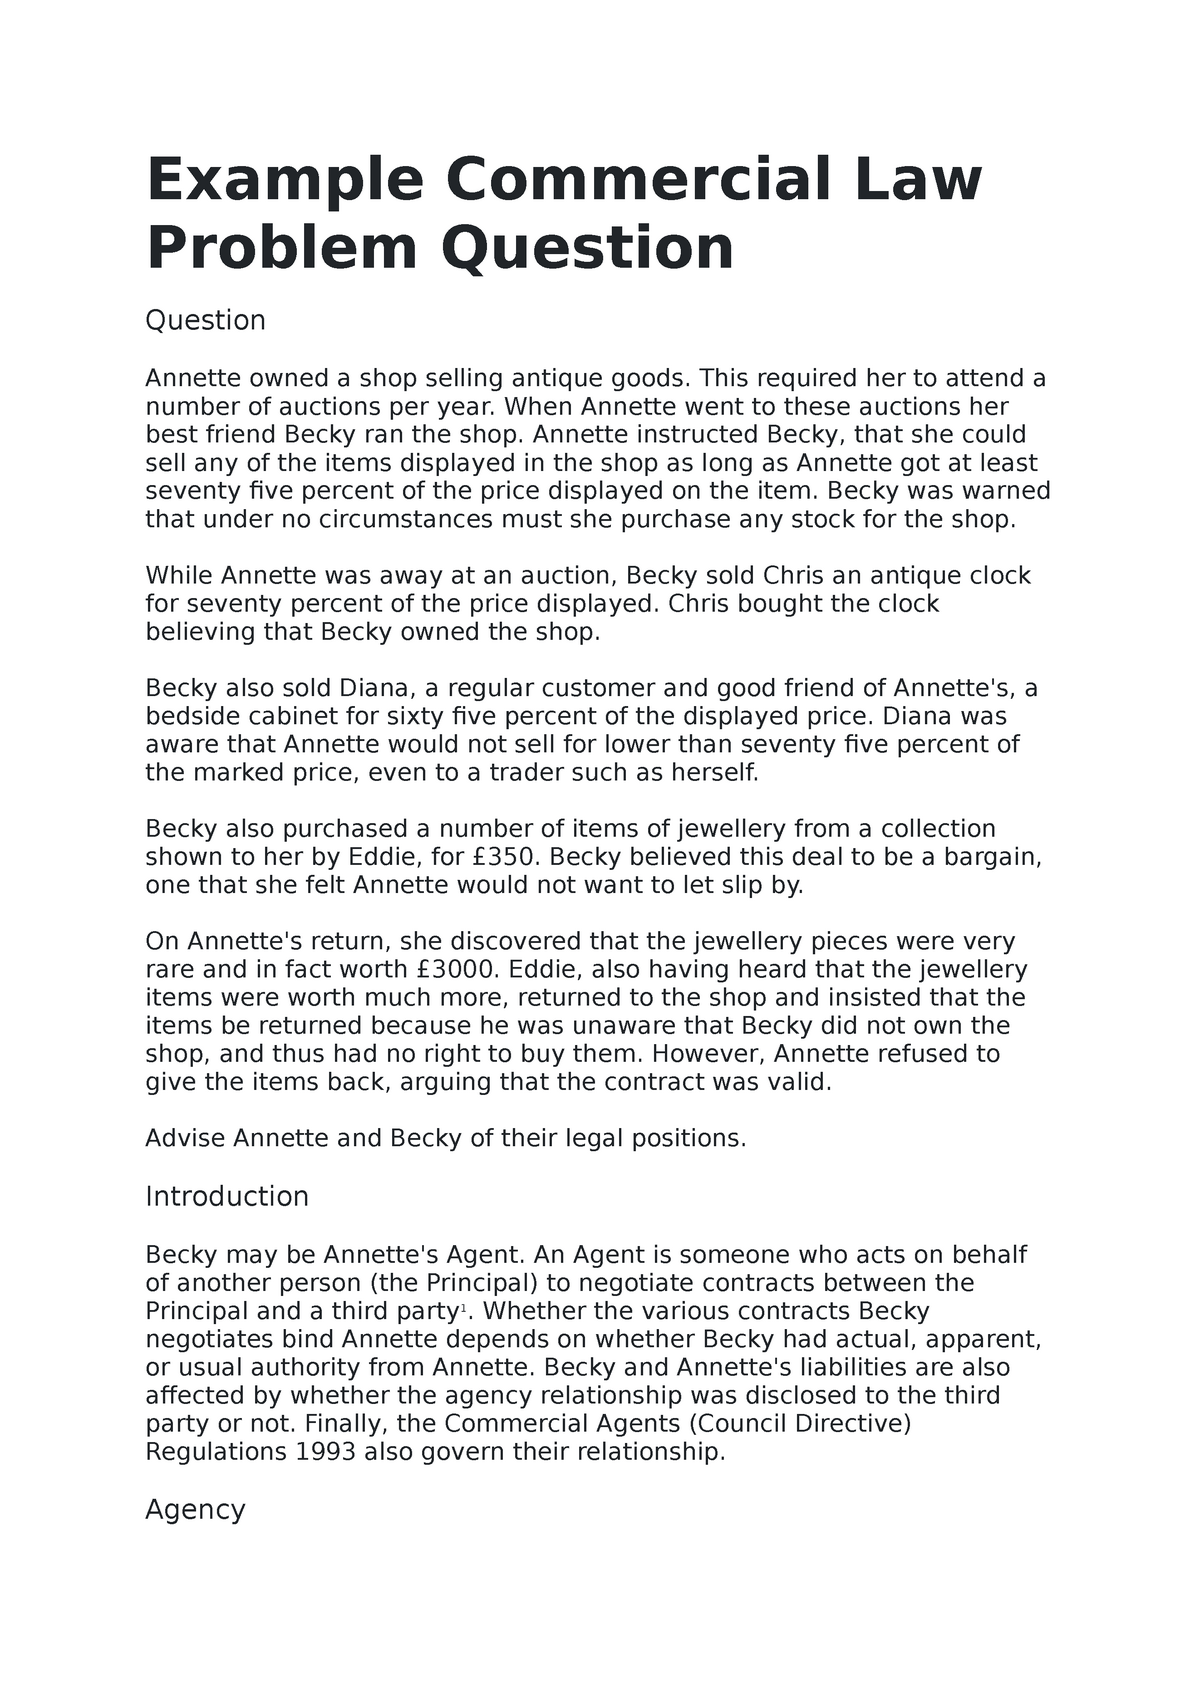 agency law essay questions